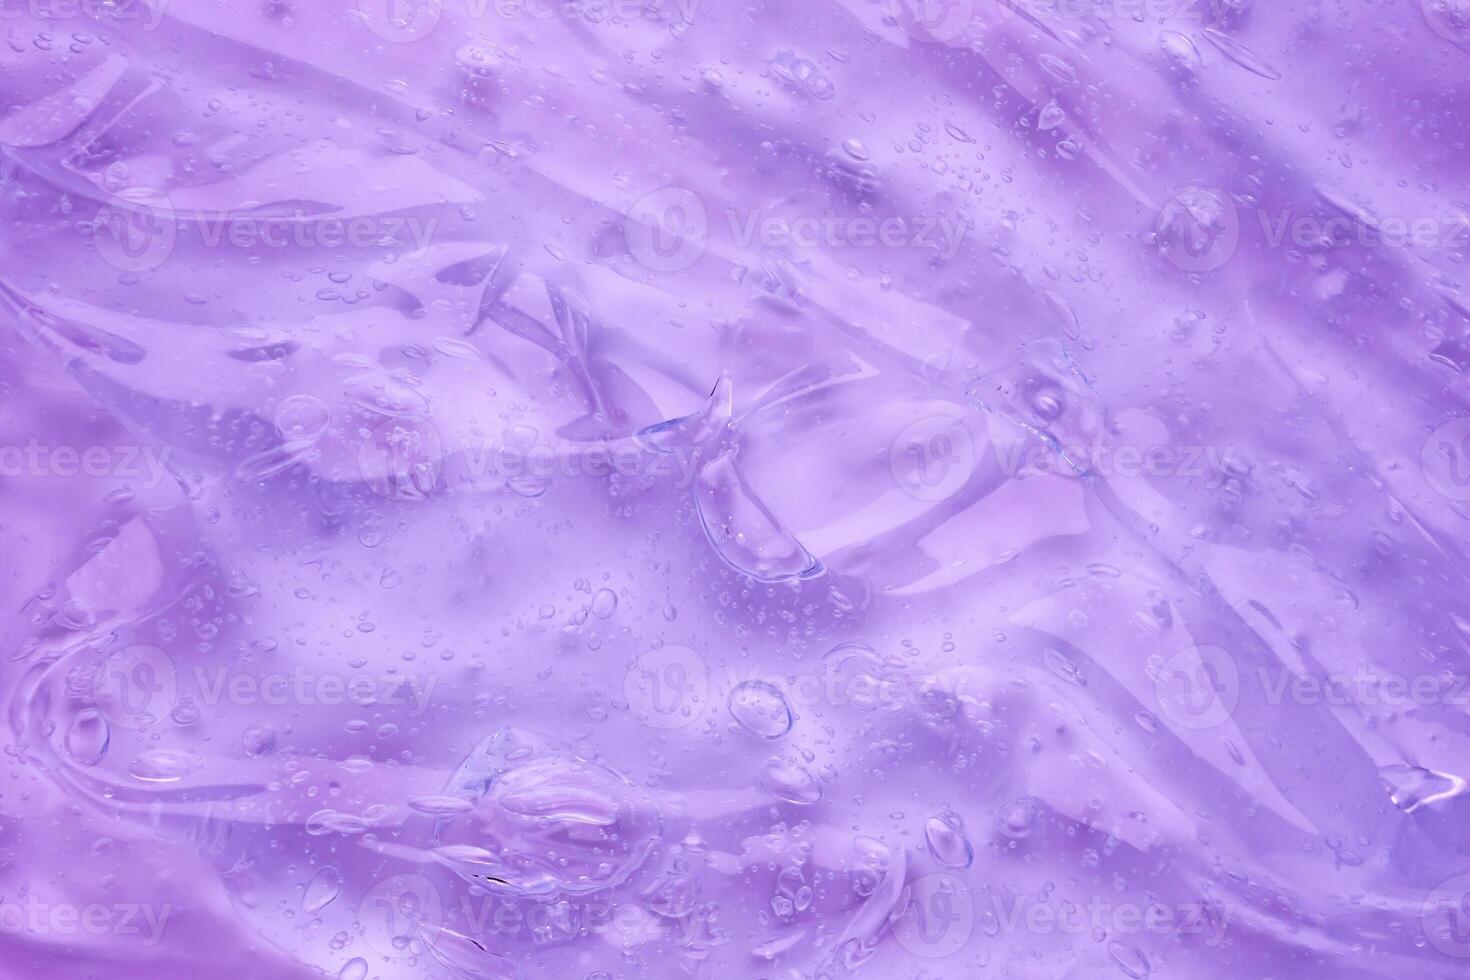 transparent klar lila flytande serum gel kosmetisk textur bakgrund foto